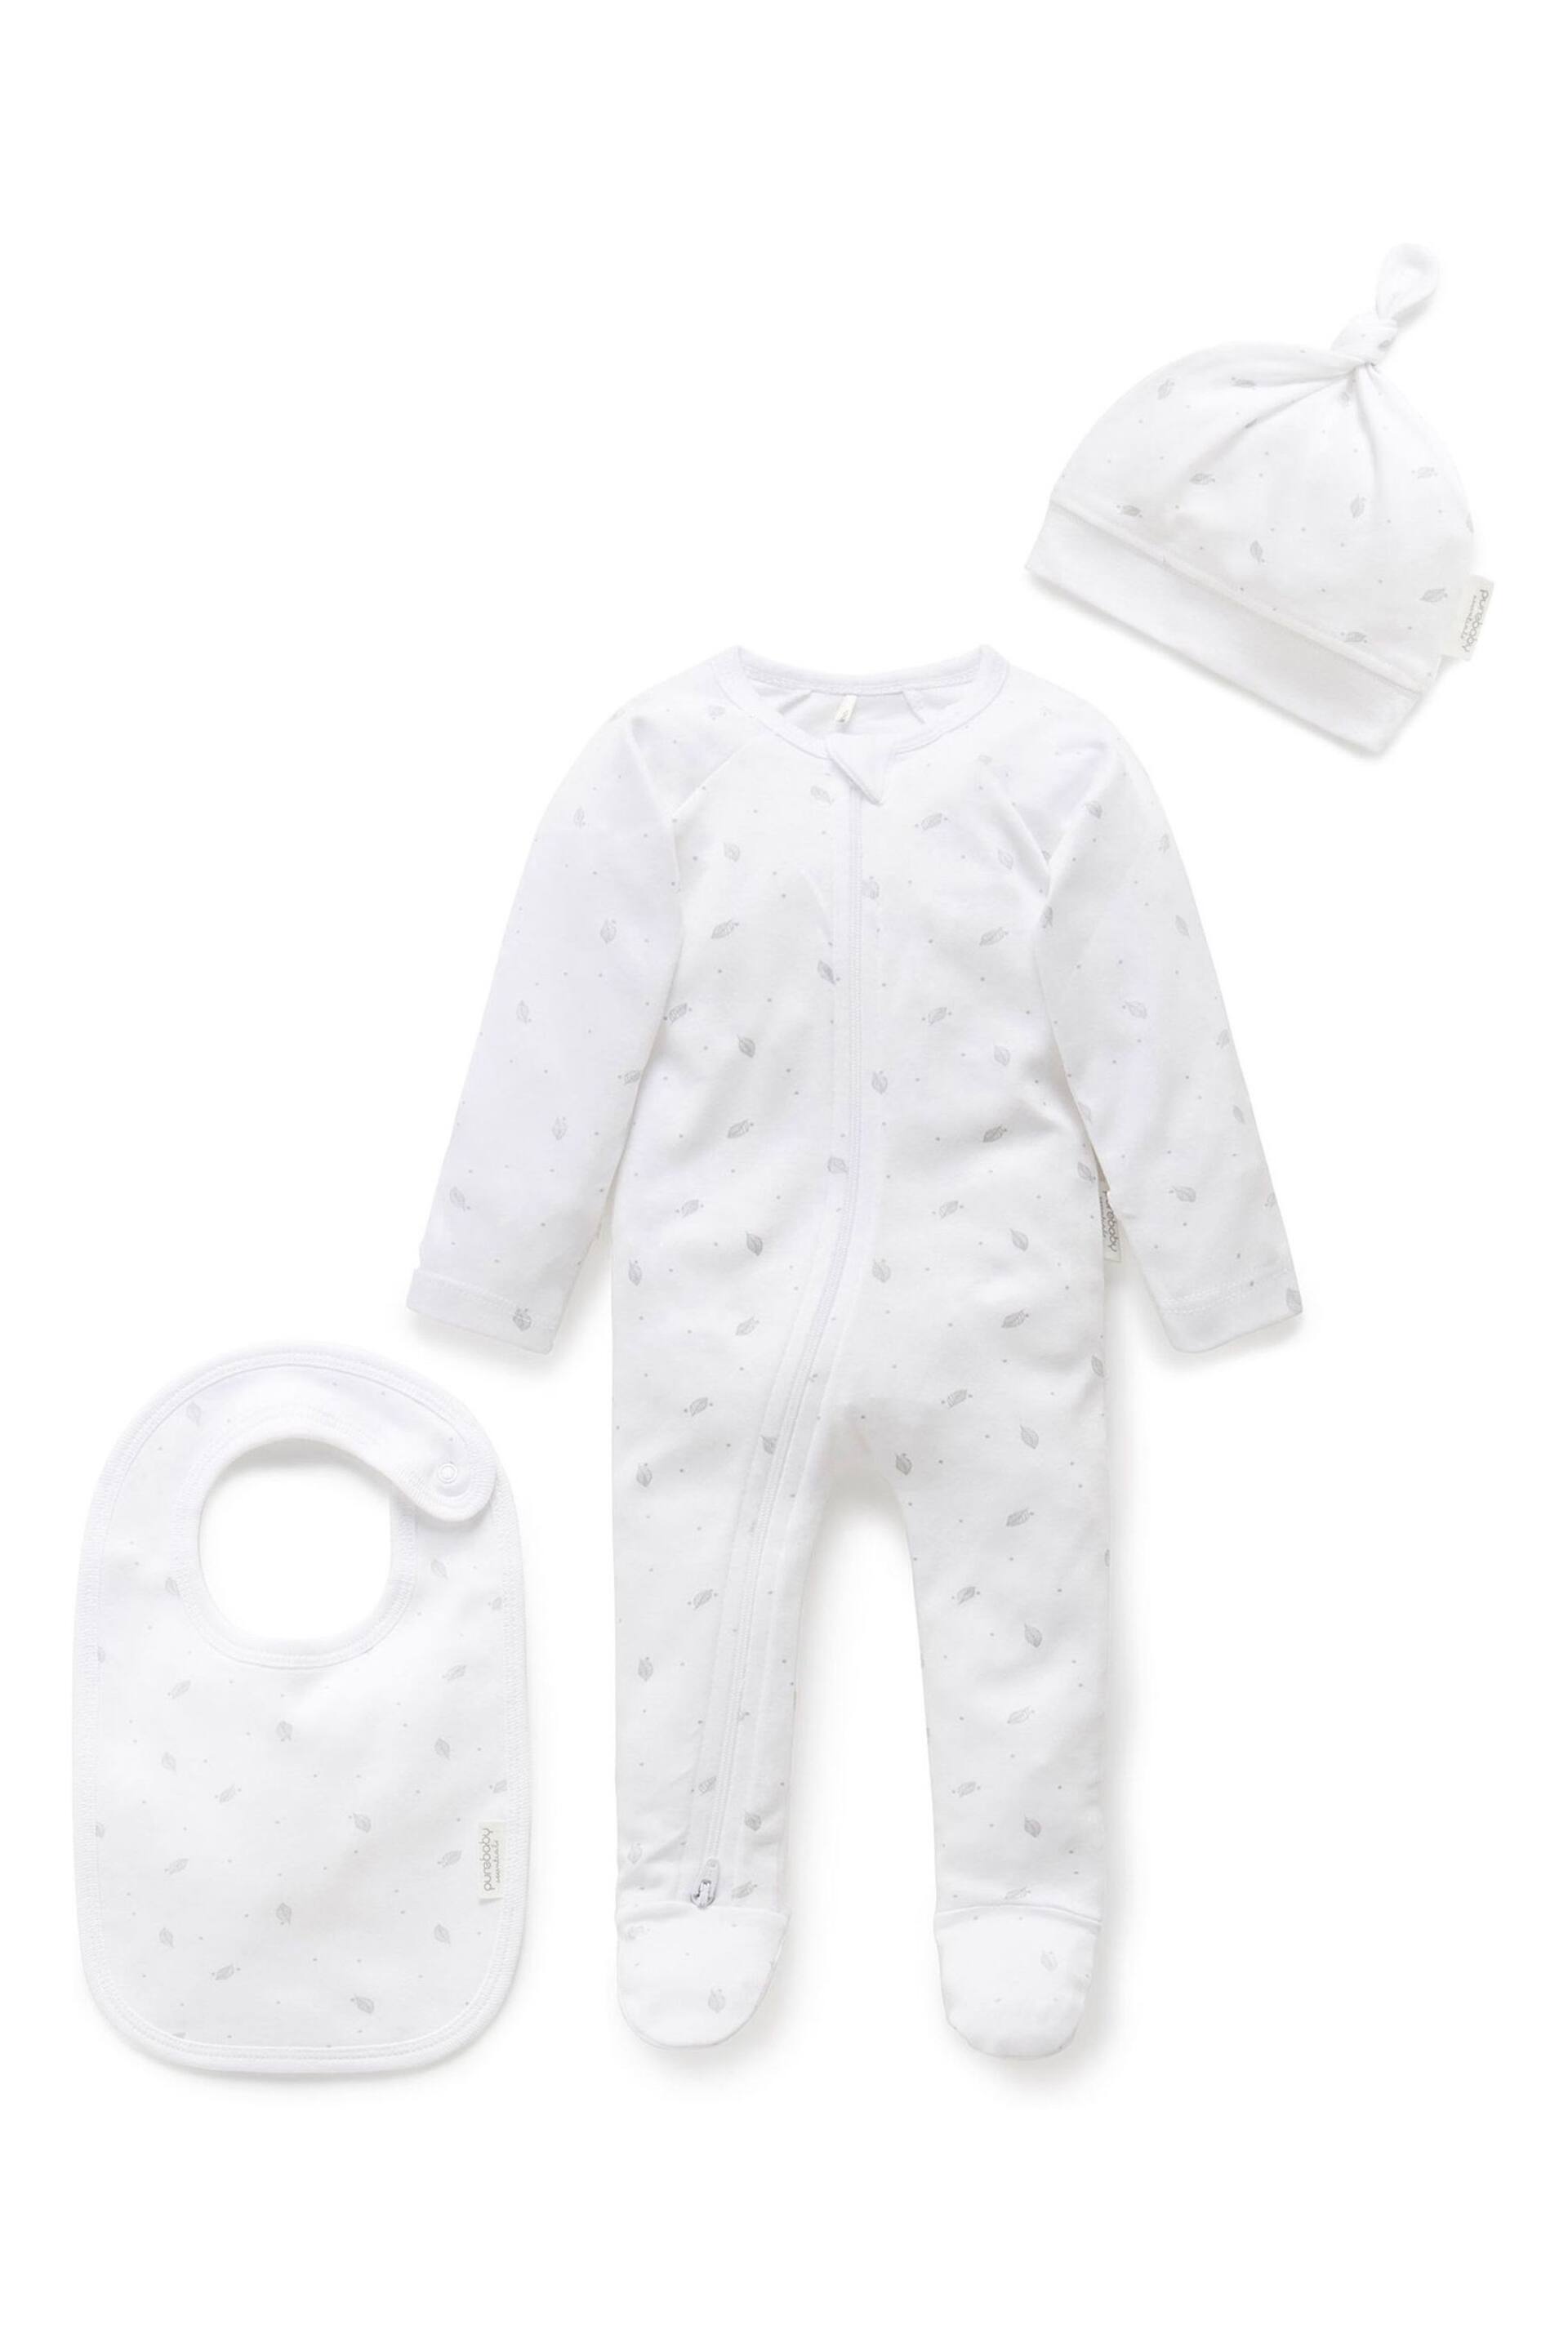 Purebaby 3 Piece Baby Hat, Bib & Sleepsuit Set - Image 1 of 2